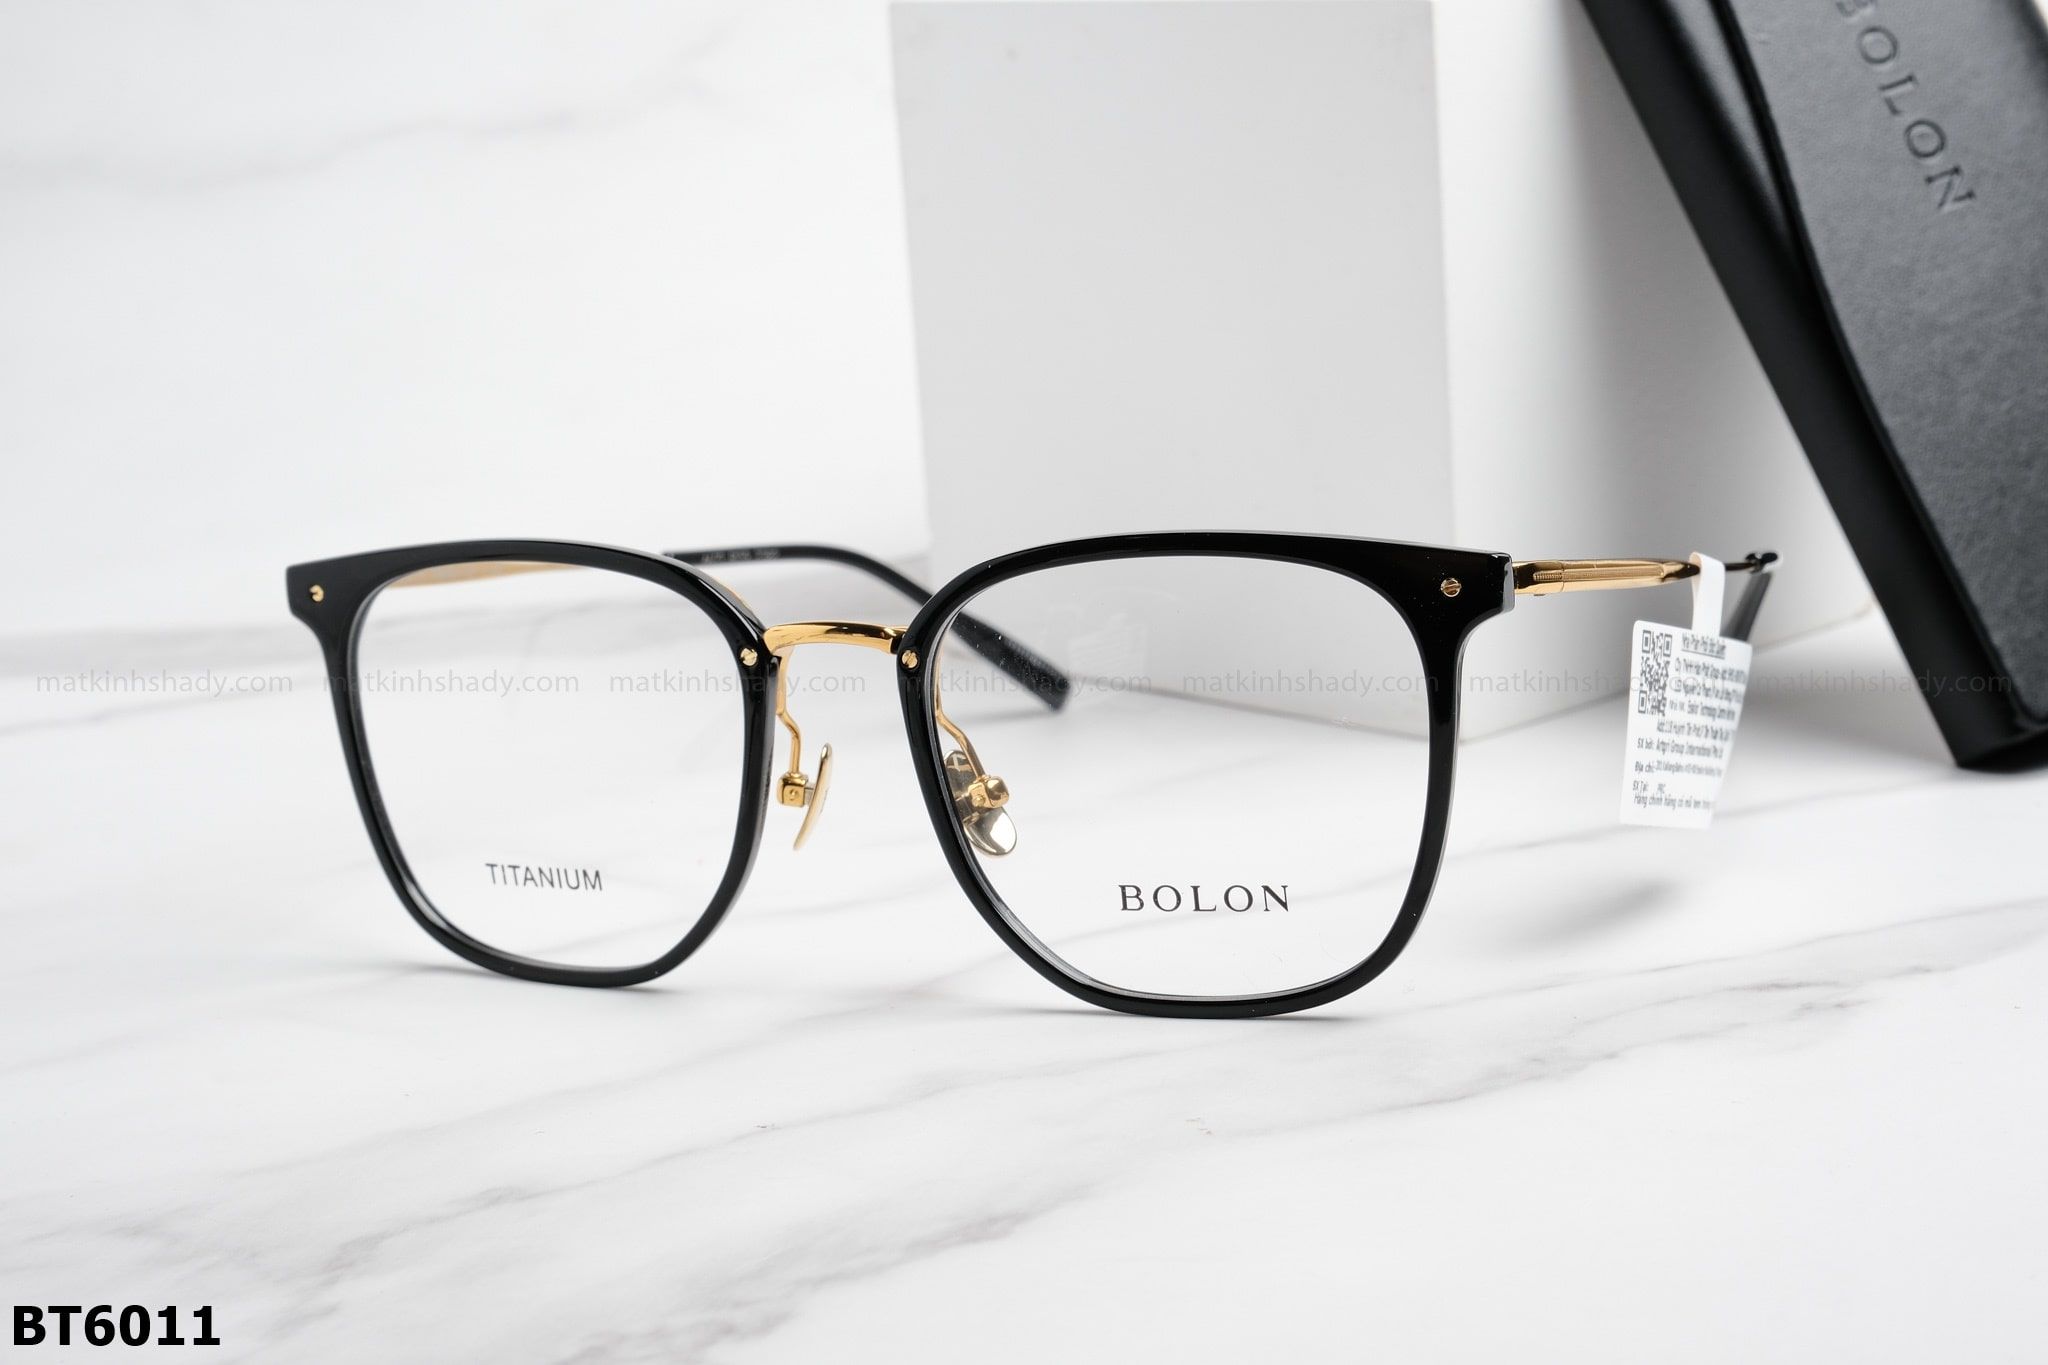  Bolon Eyewear - Glasses - BT6011 